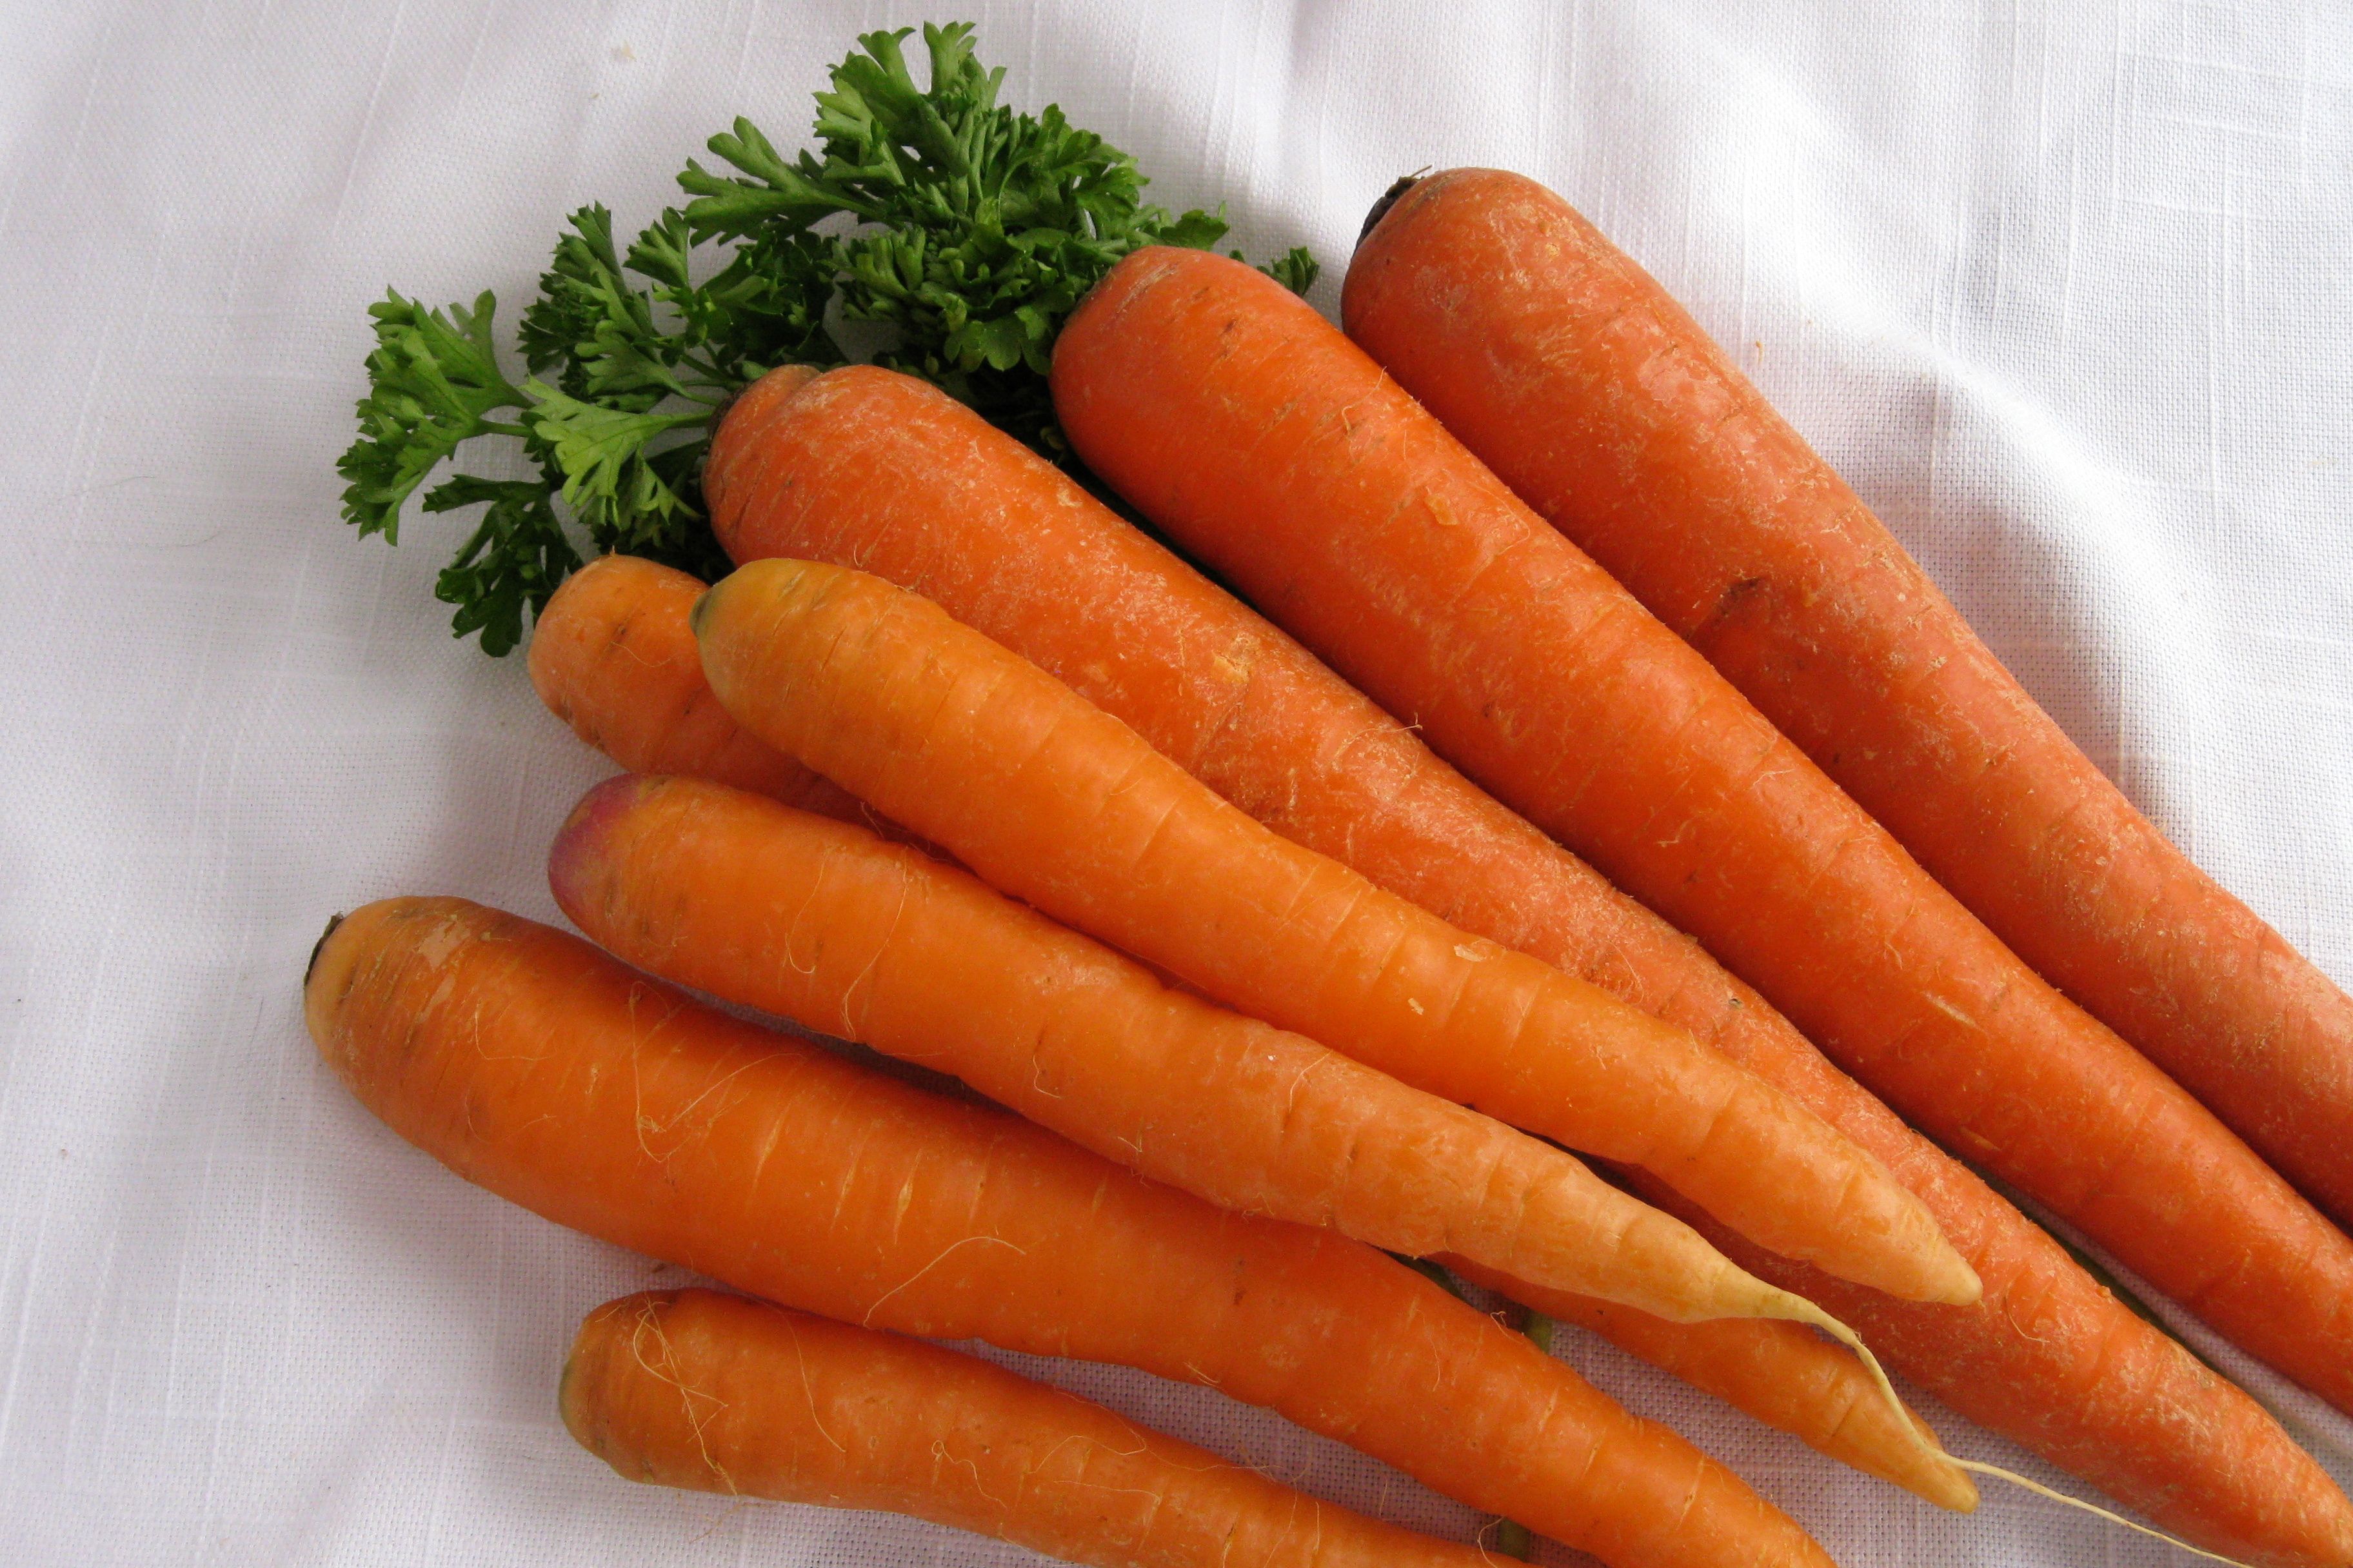 3648x2431px Carrots (3652.4 KB).08.2015